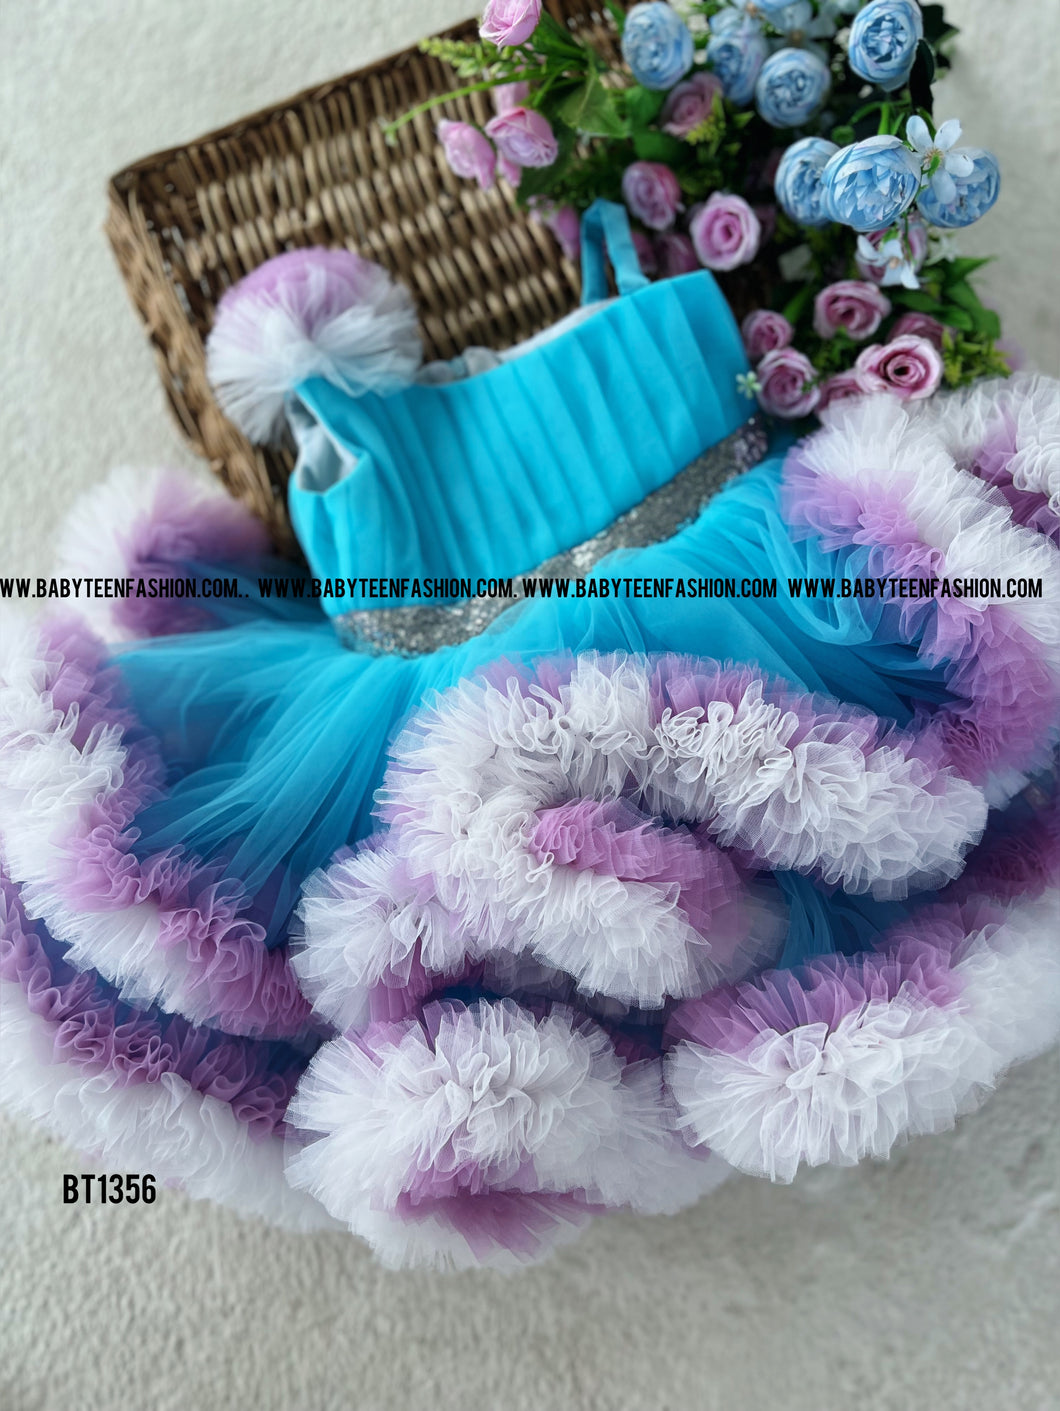 BT1356 Azure Blossom Festive Frock - Blooms of Elegance for Your Little One